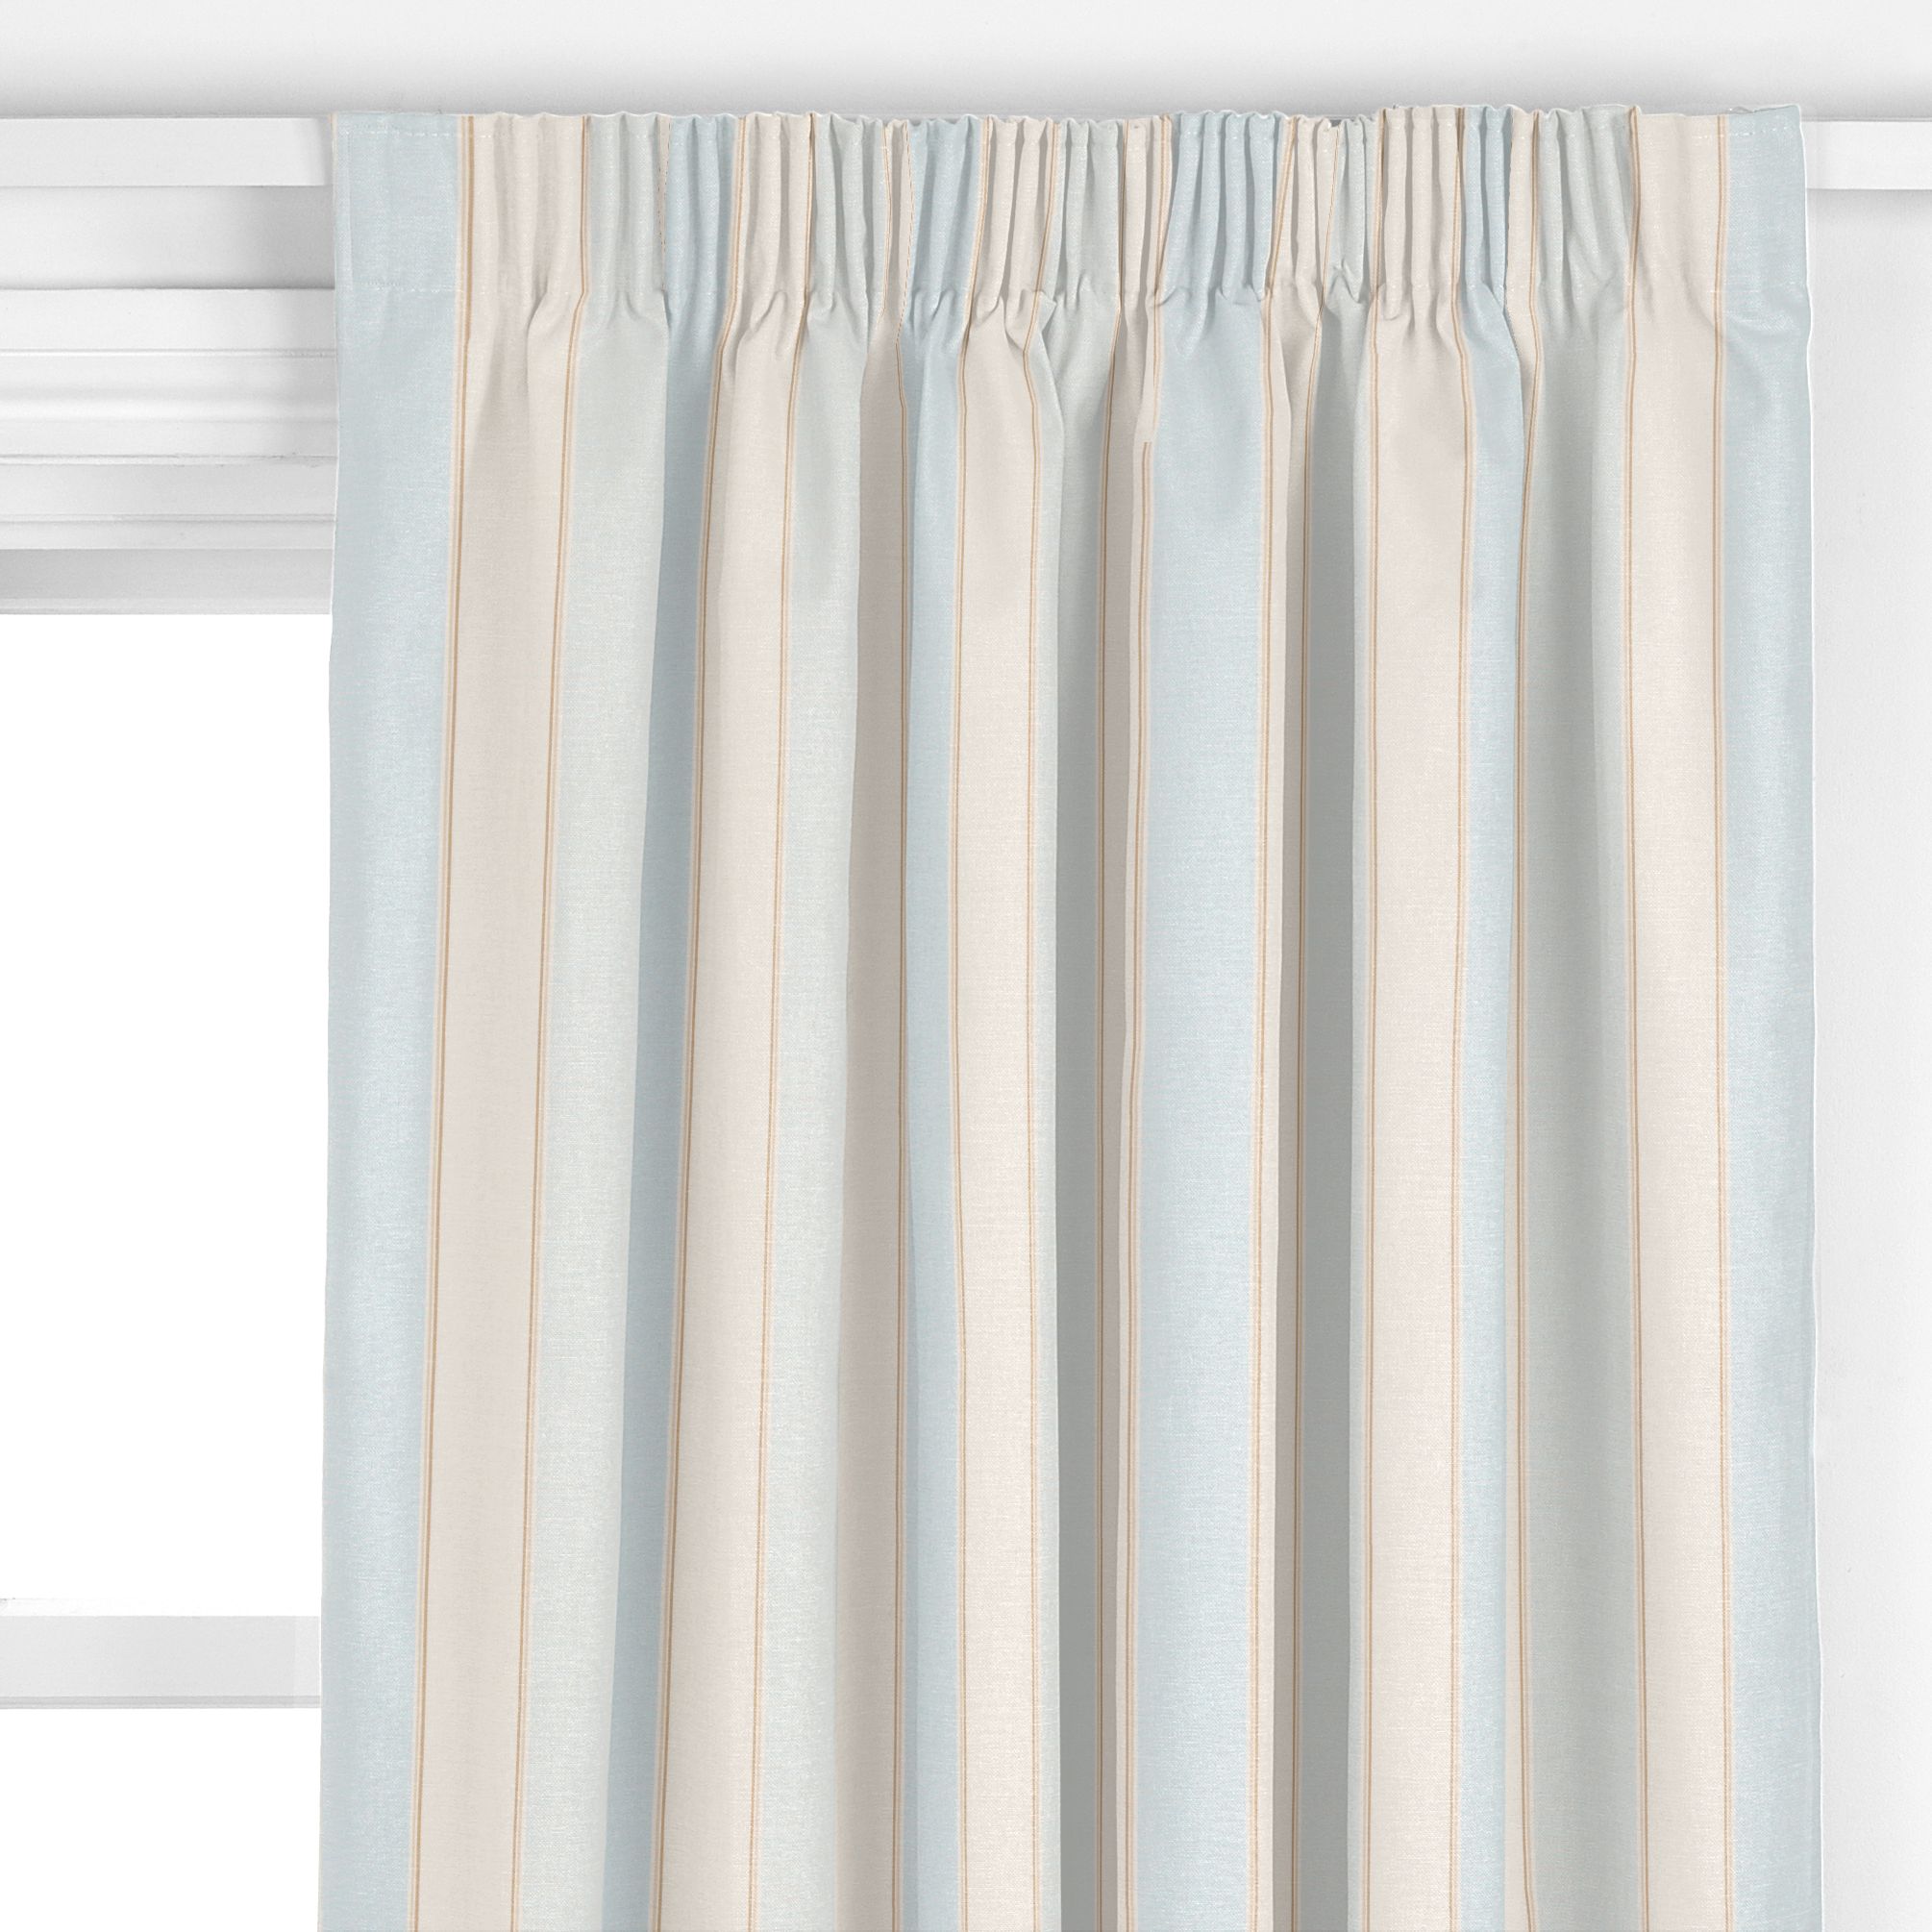 Broad Stripe Pencil Pleat Curtains,